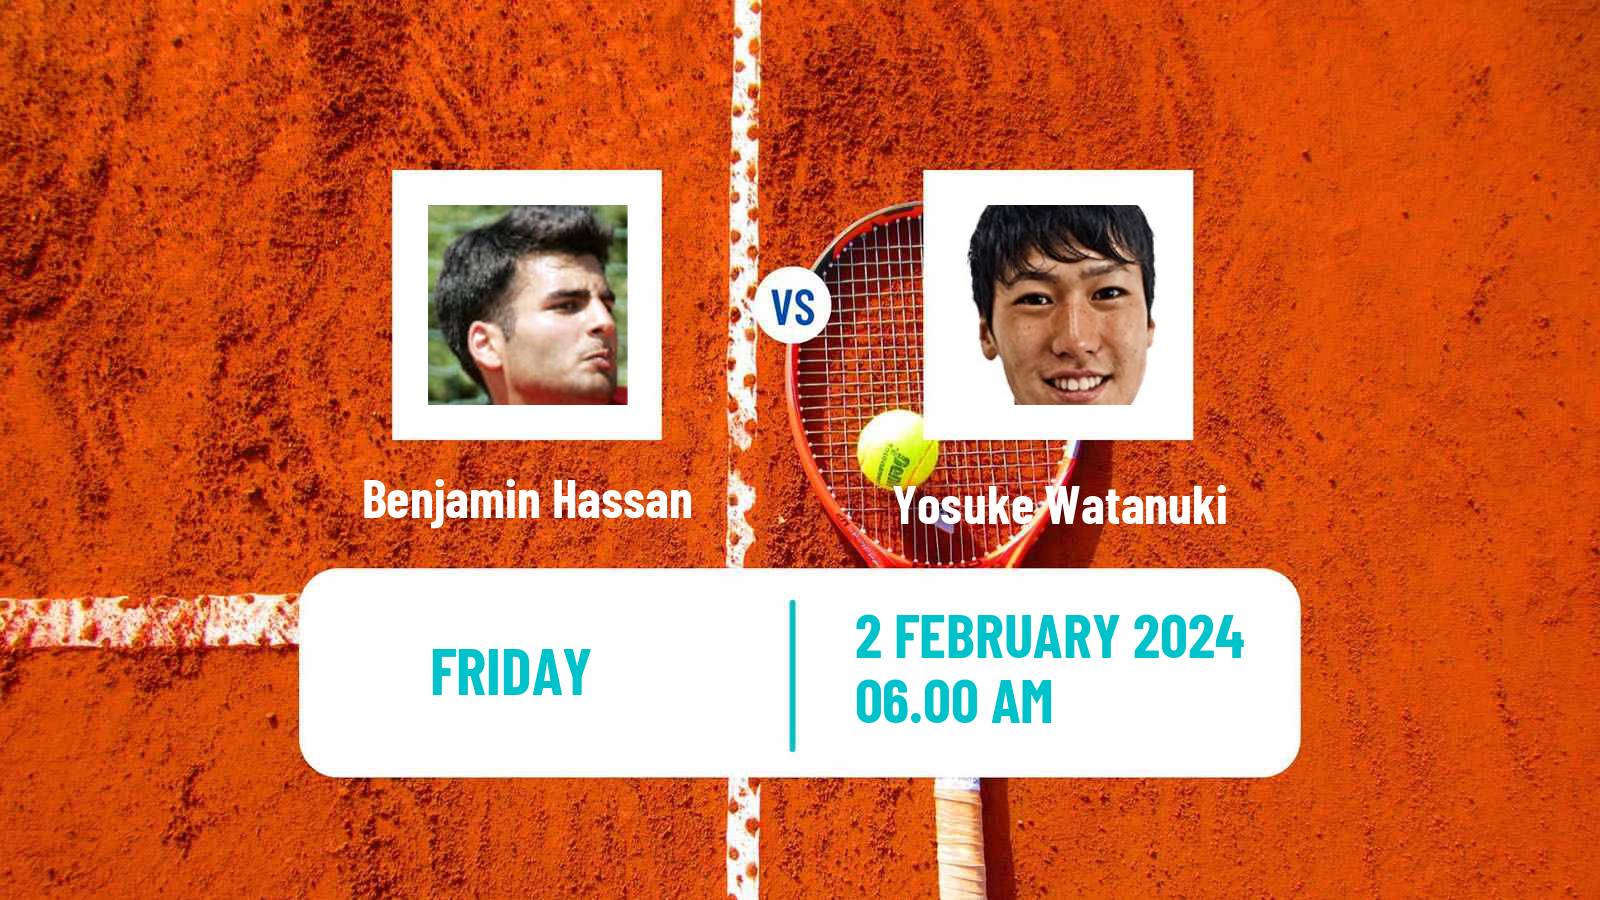 Tennis Davis Cup World Group I Benjamin Hassan - Yosuke Watanuki